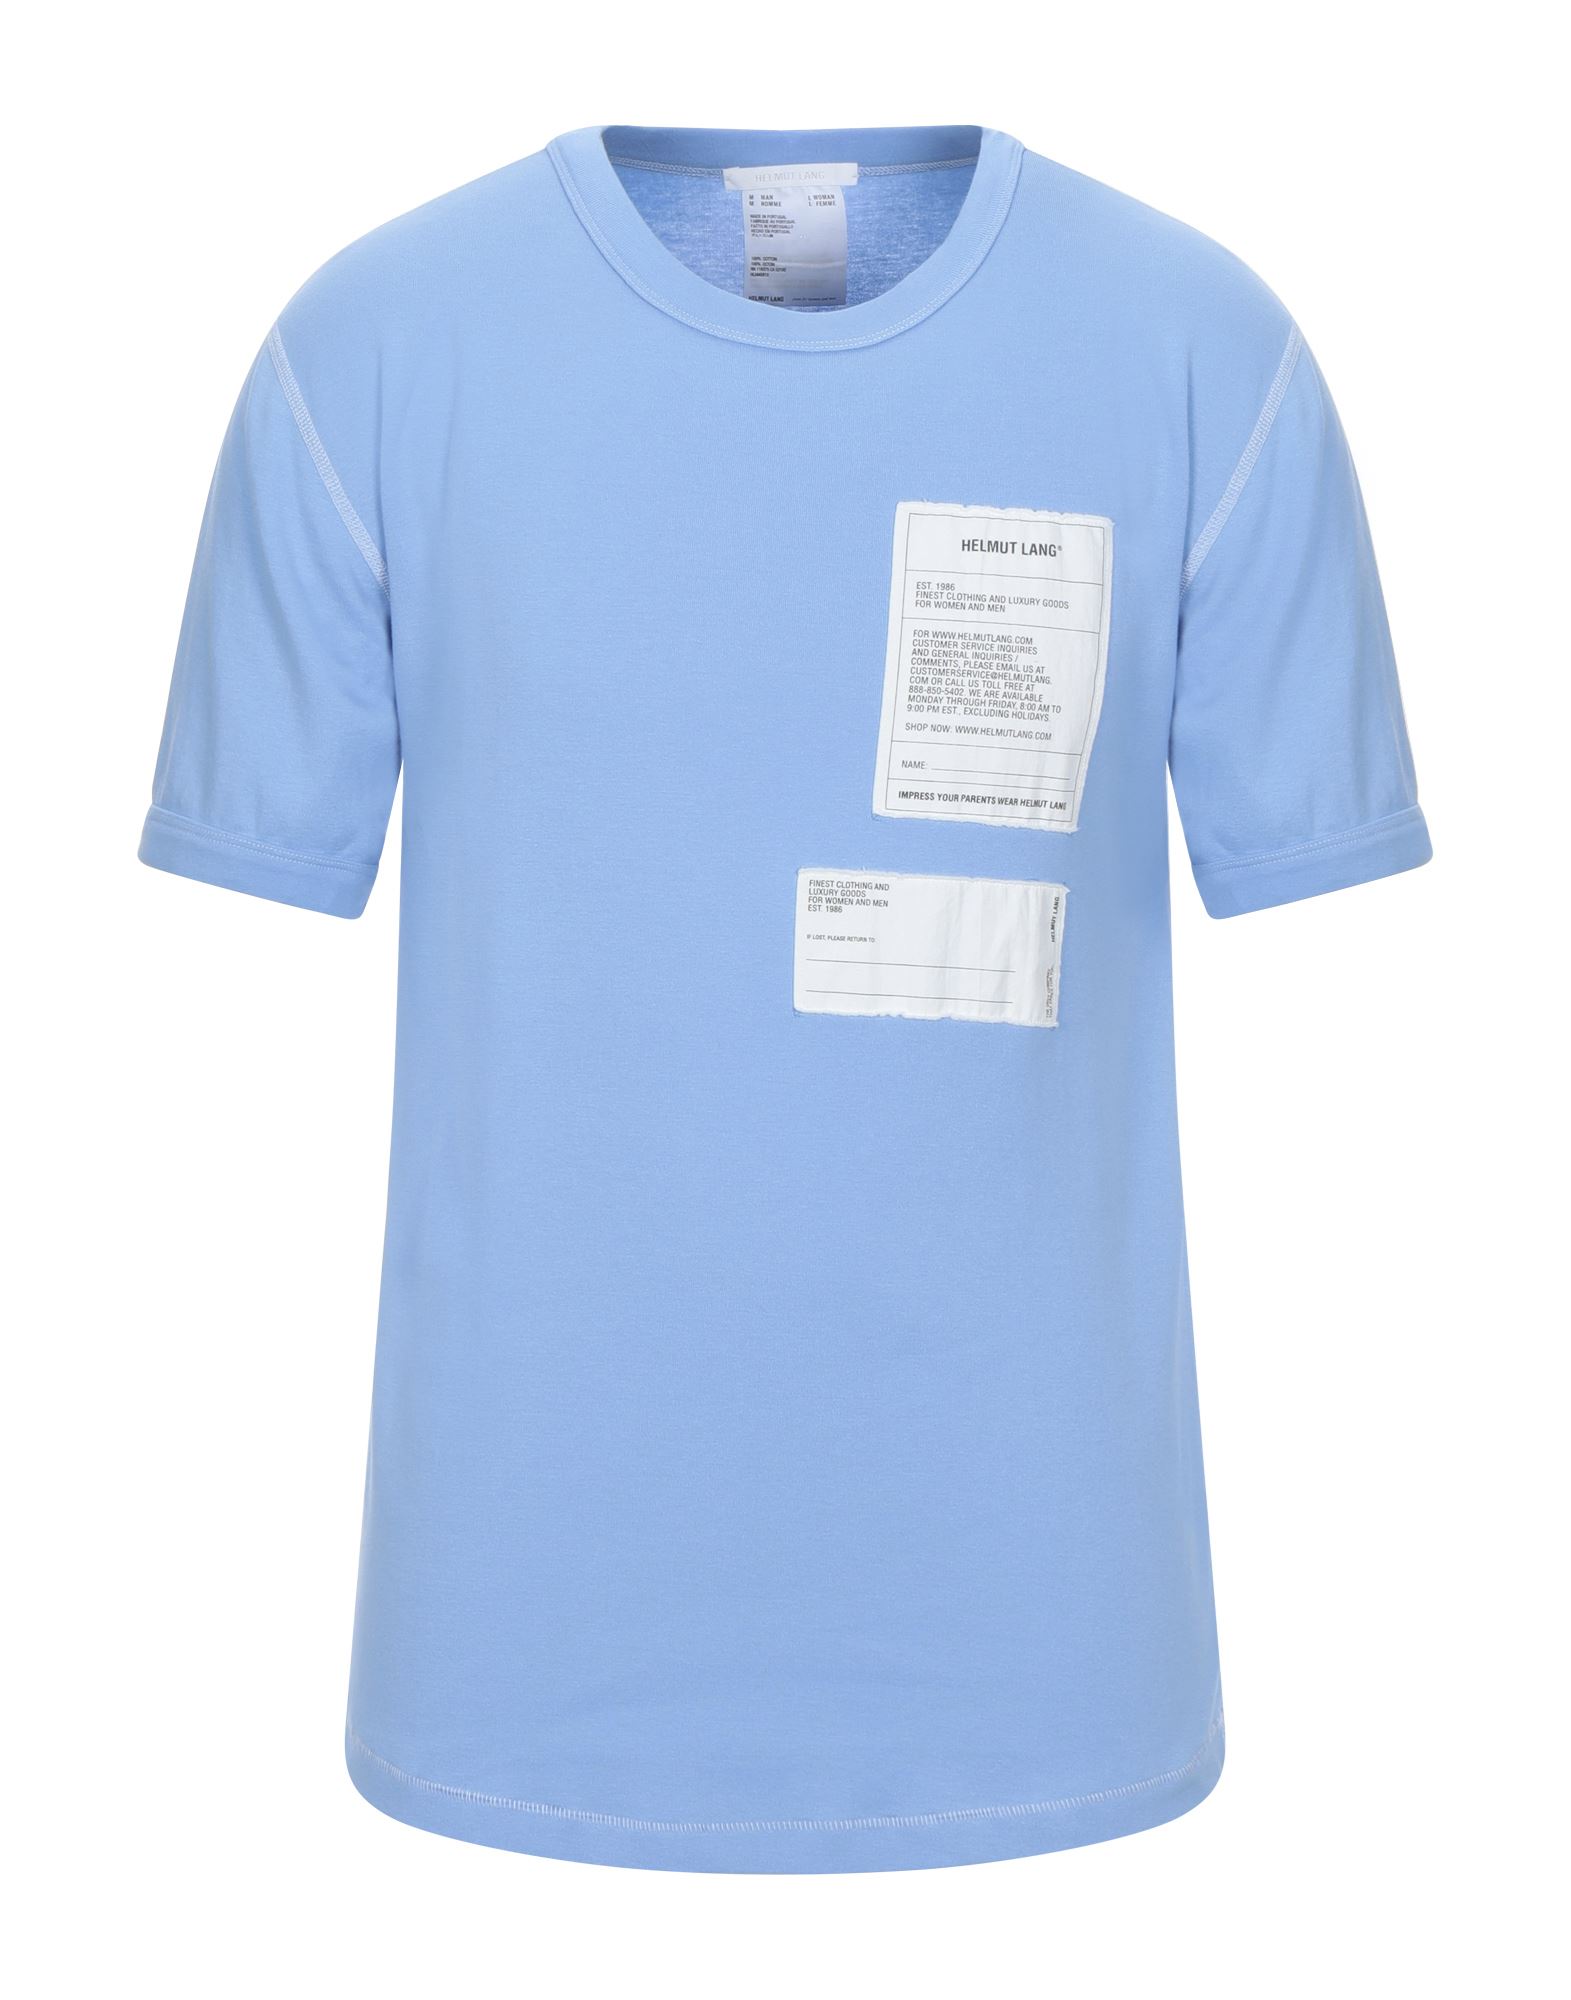 HELMUT LANG T-shirts - Item 12505864